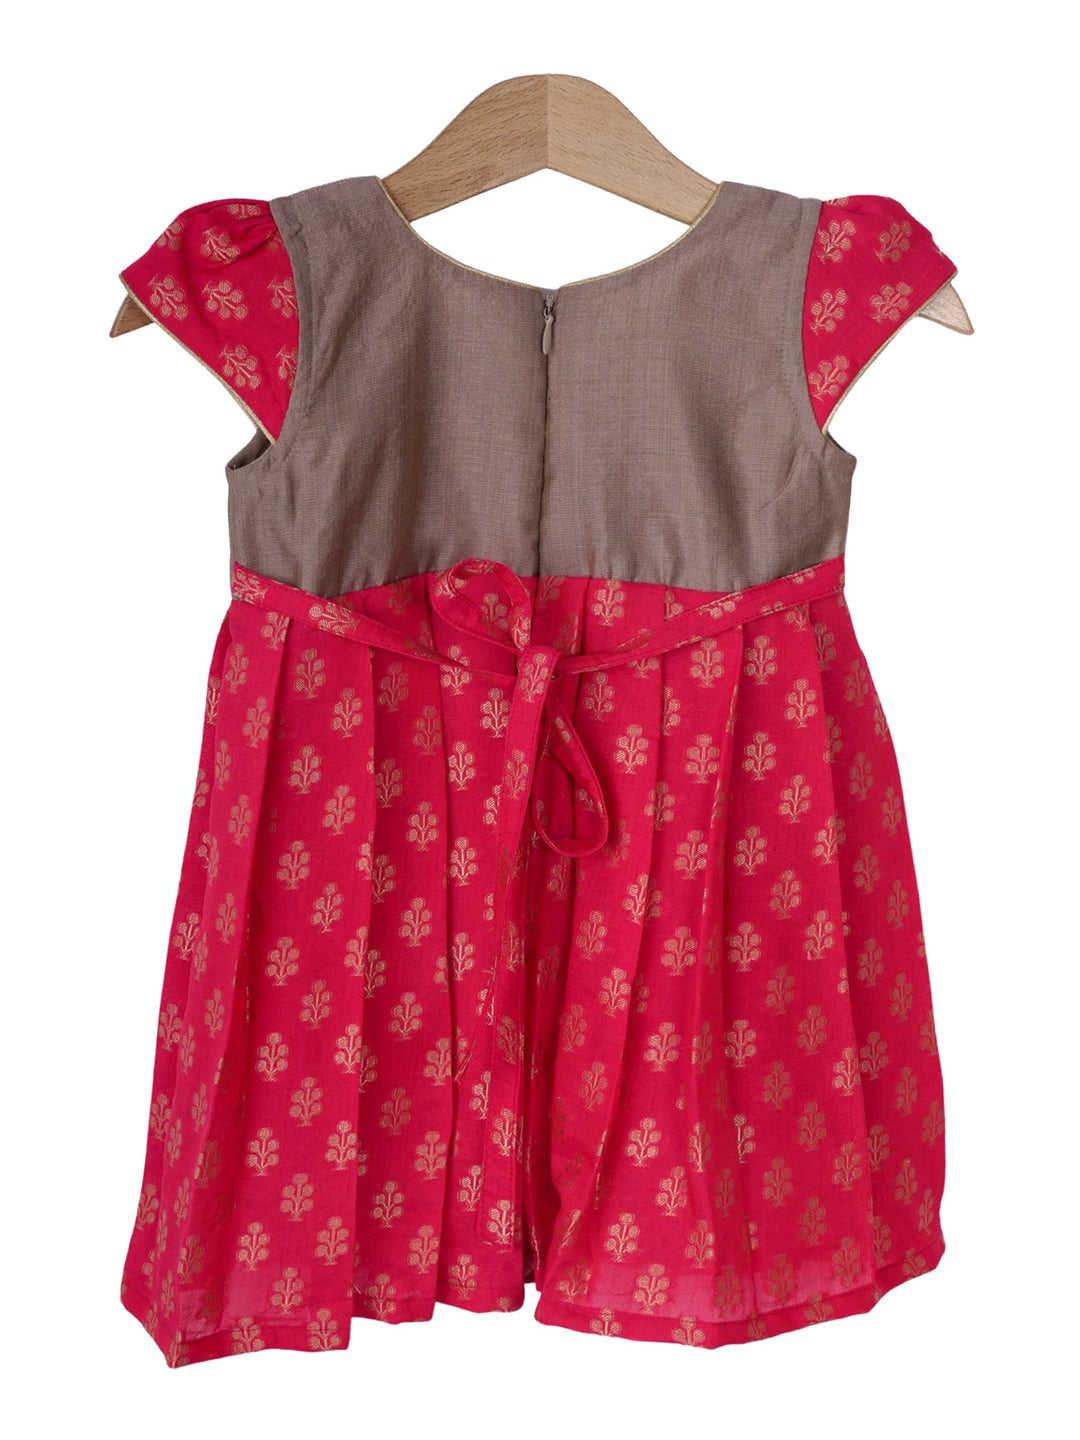 The Nesavu Baby Frock / Jhabla Red With Grey Designer Printed Jacquard Cotton Frock For New Born Baby Girl psr silks Nesavu